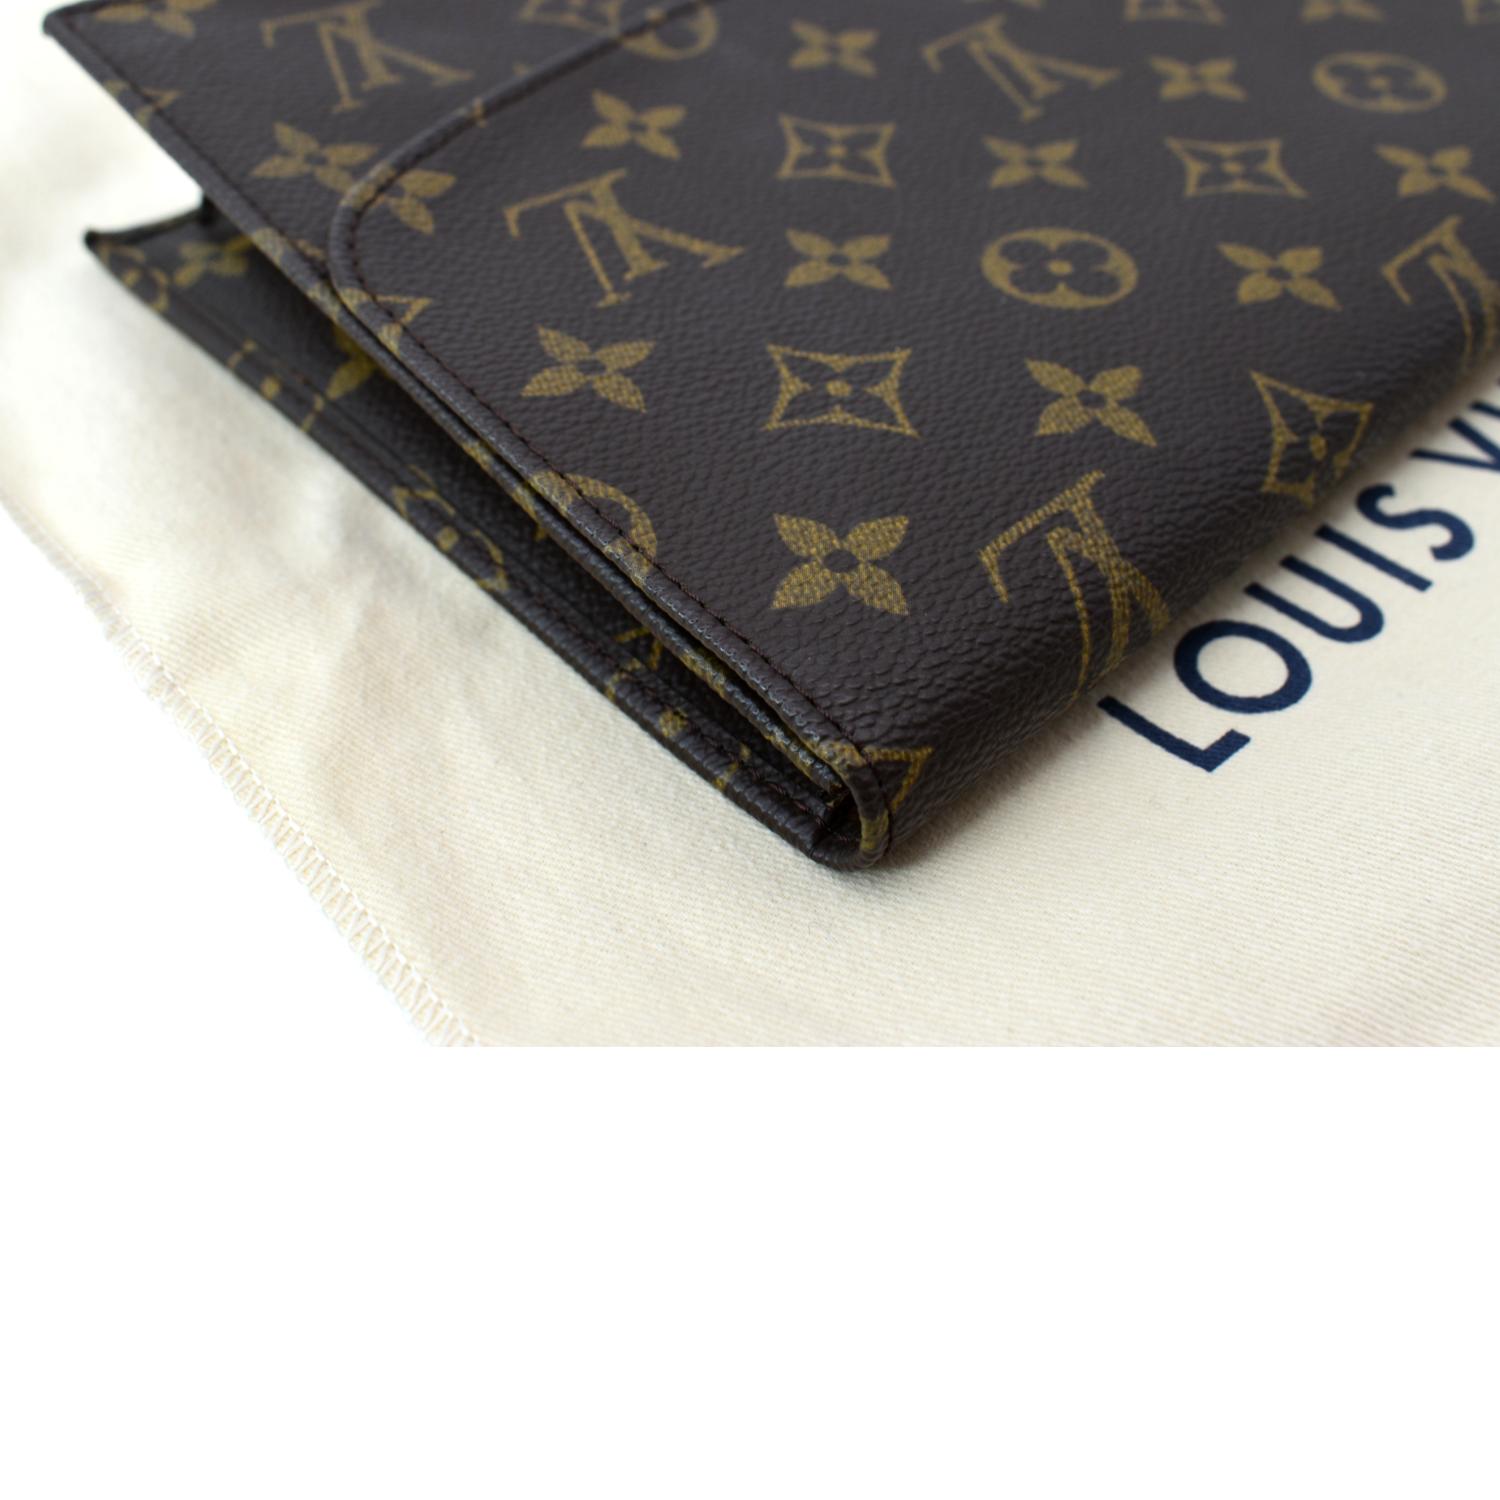 Louis Vuitton Rabat Clutch - For Sale on 1stDibs